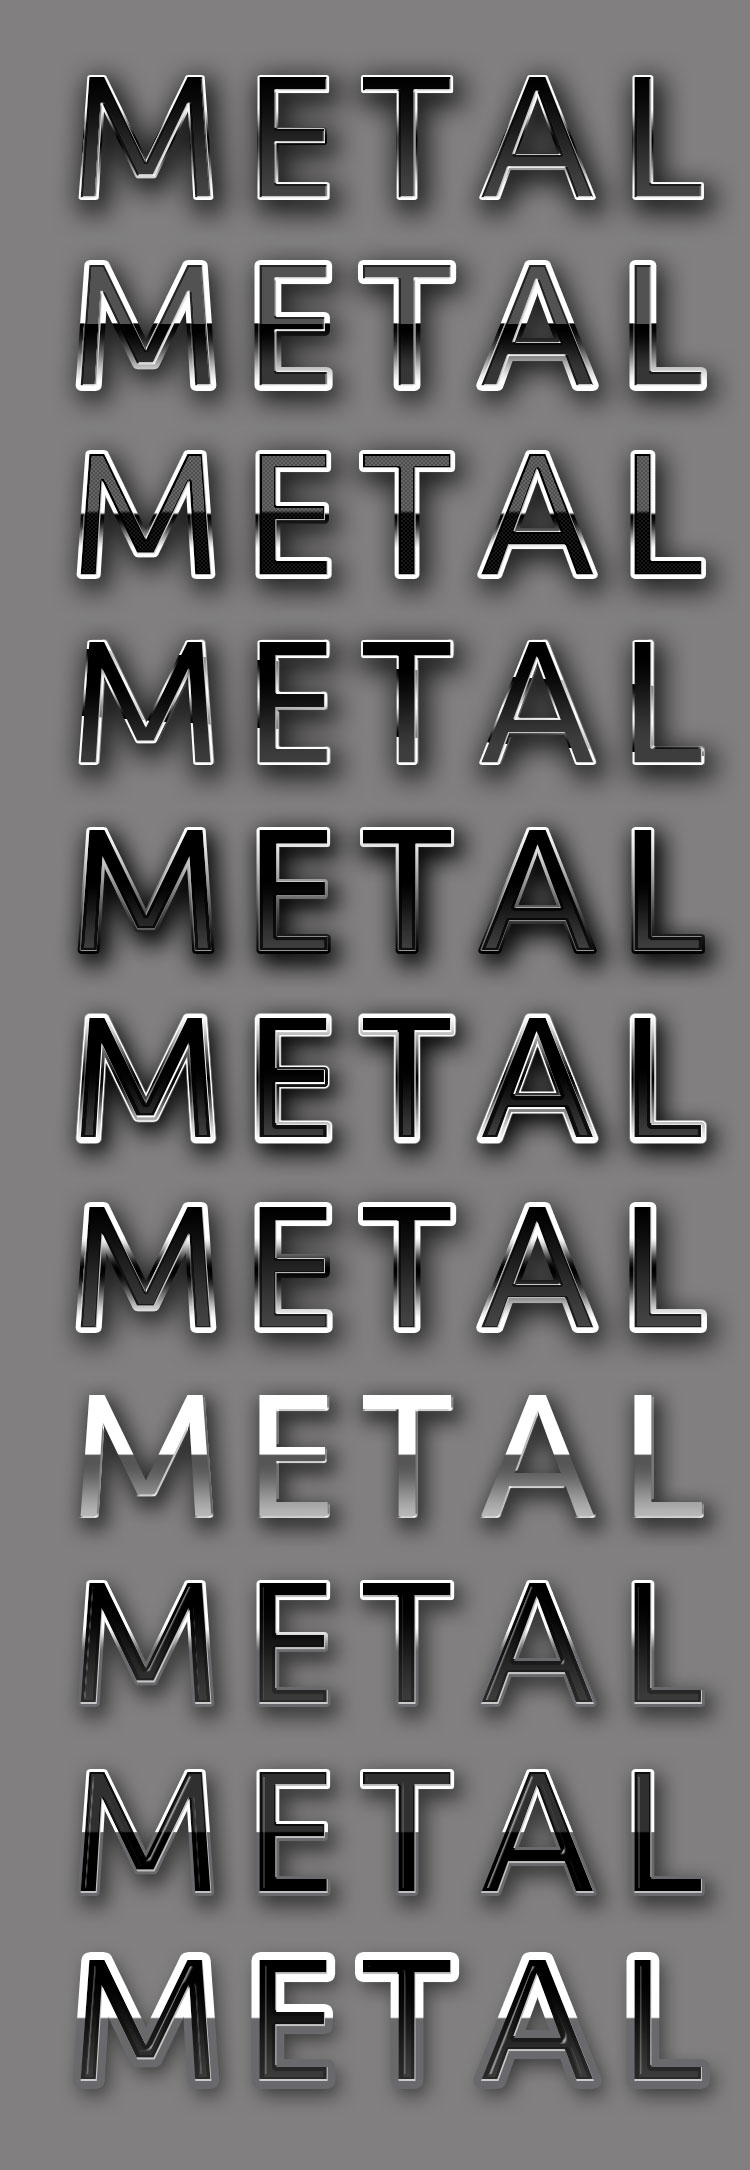 Metal PS Photoshopフォントのスタイル